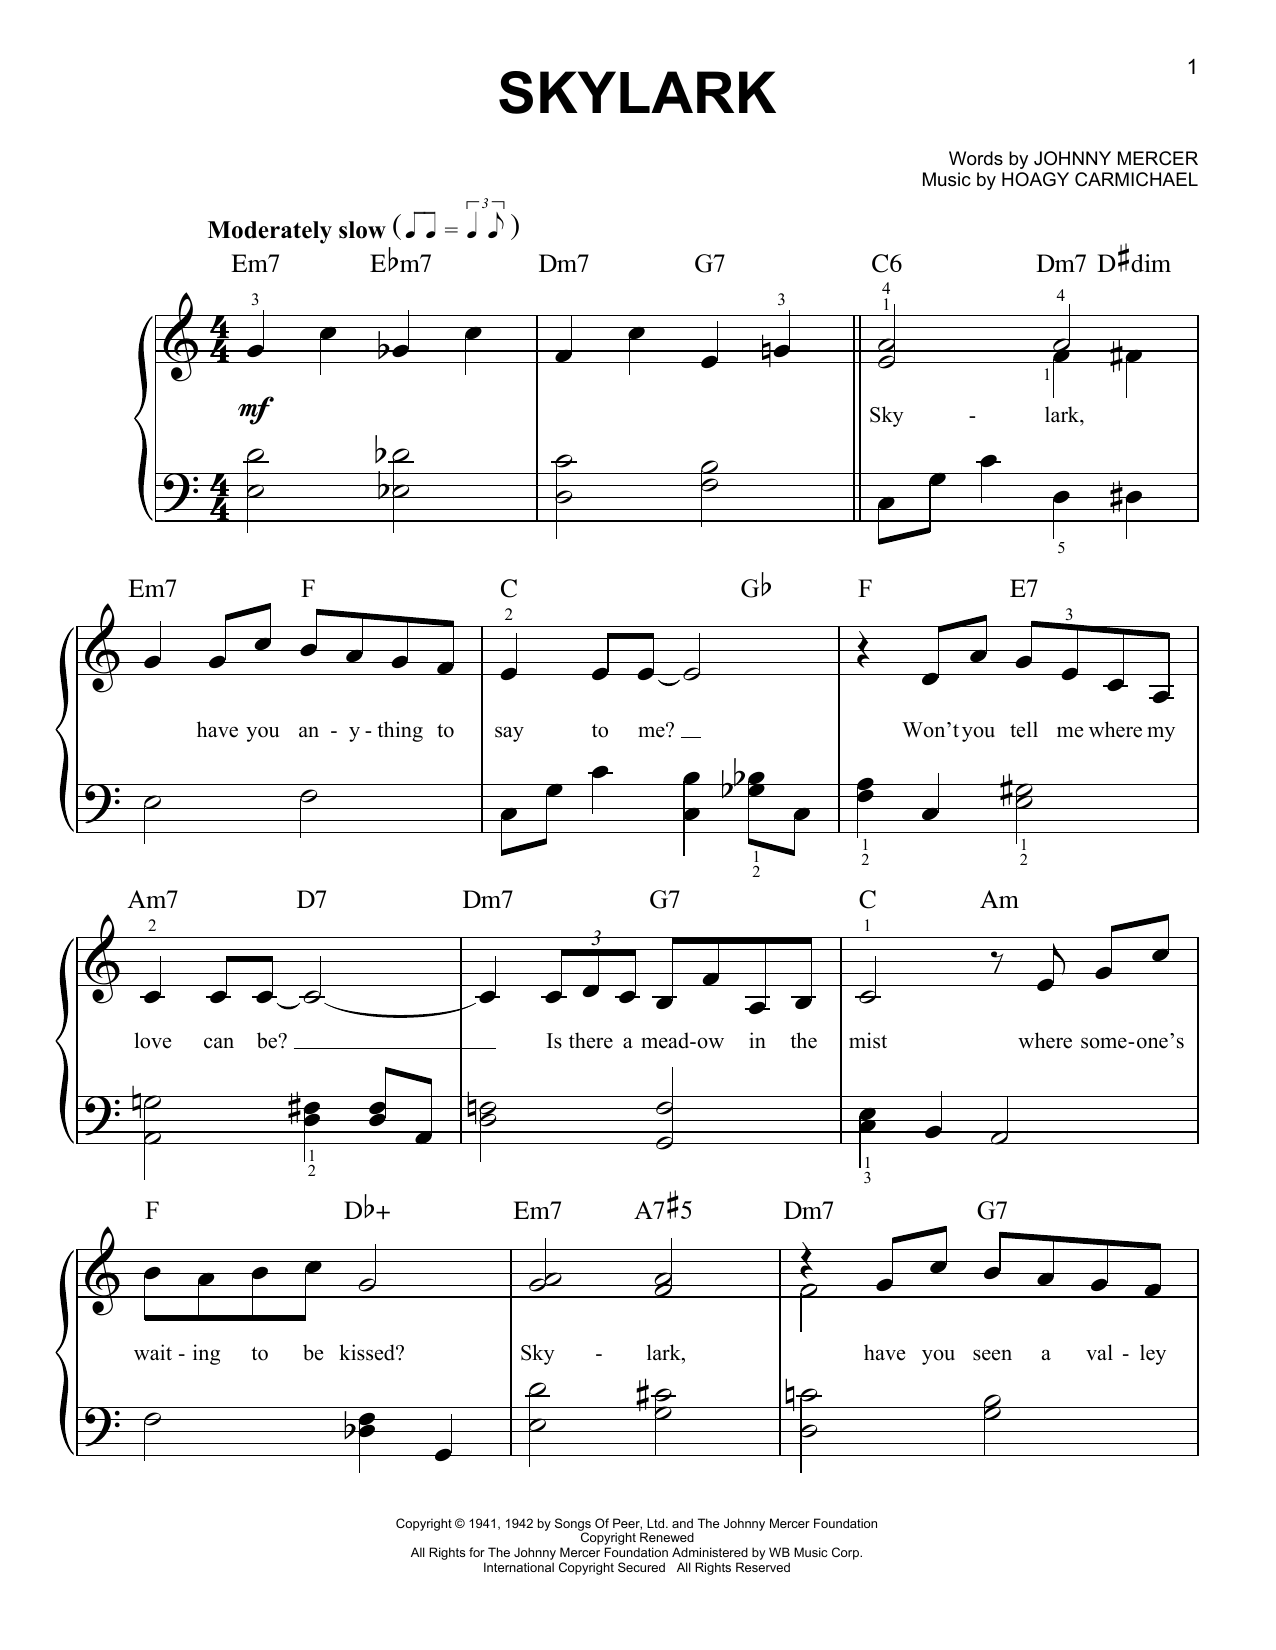 Download Hoagy Carmichael Skylark Sheet Music and learn how to play Trombone PDF digital score in minutes